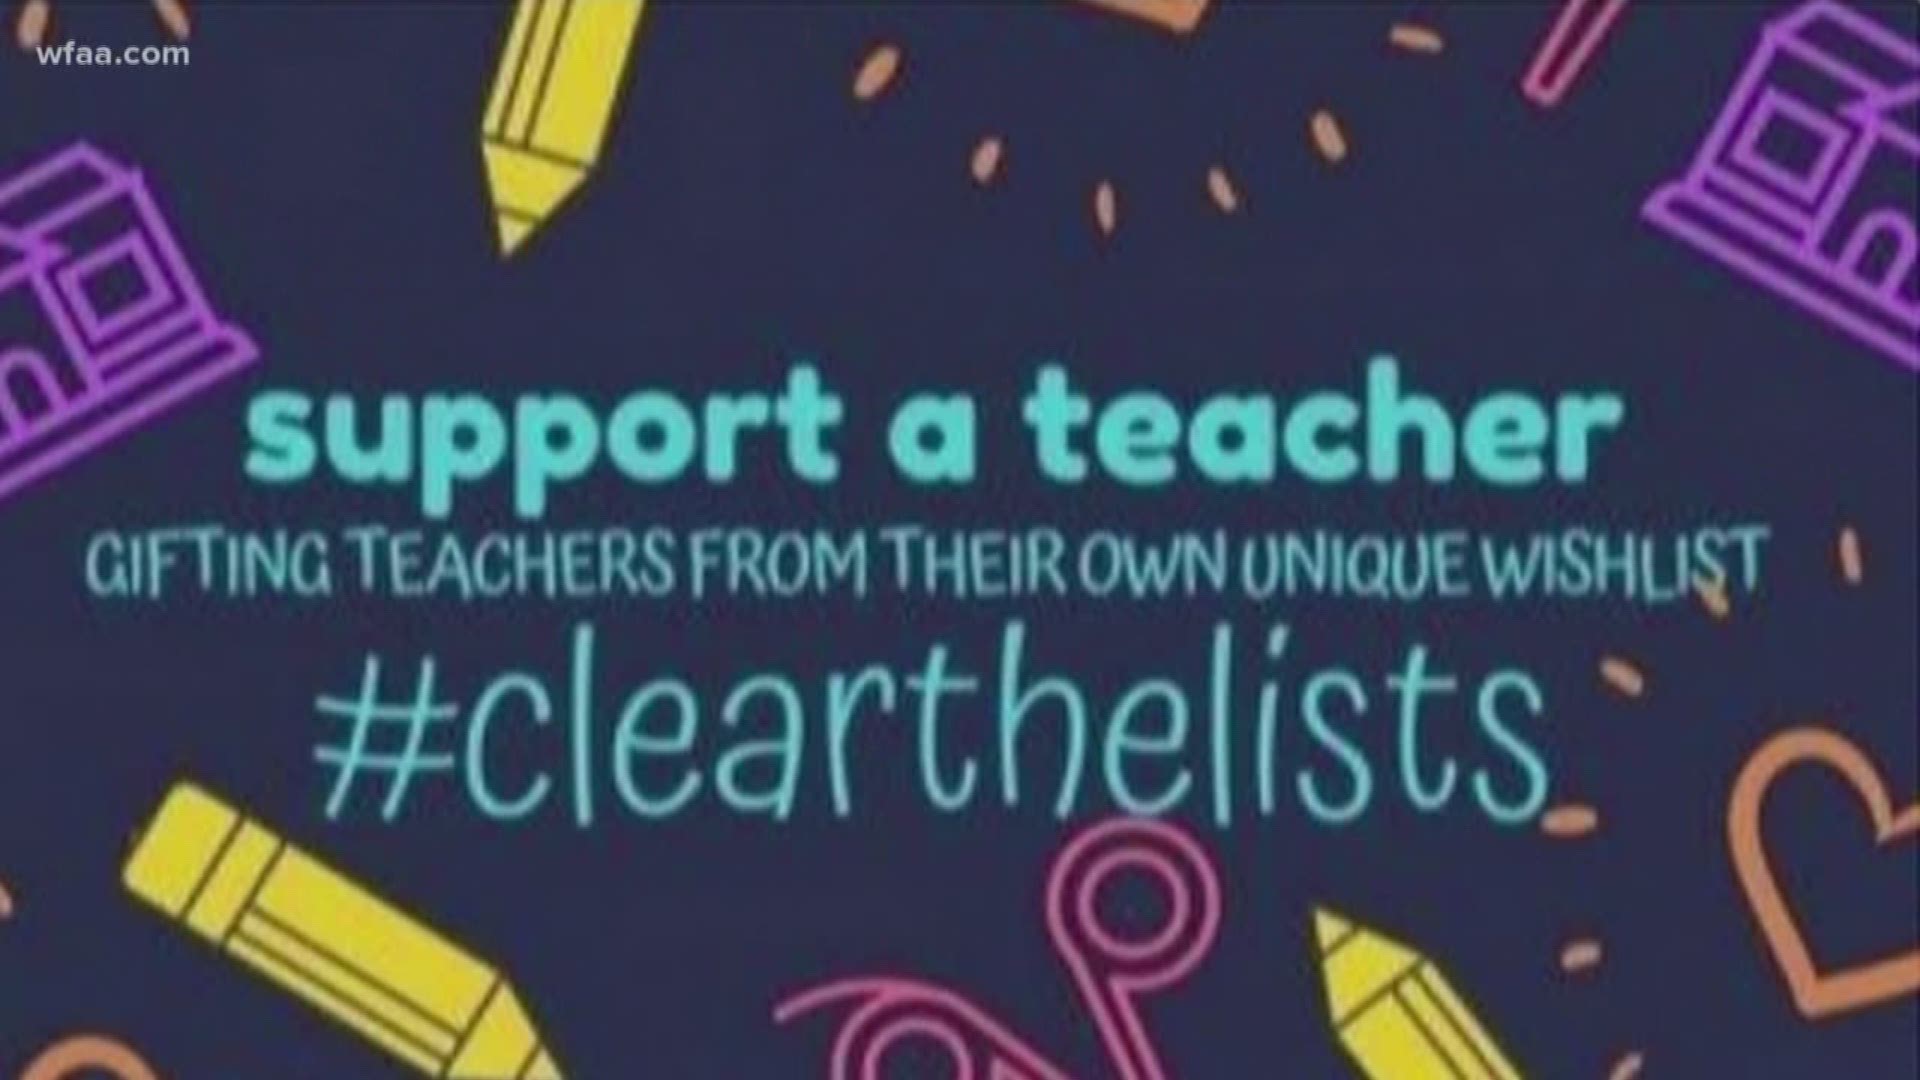 Clear the List campaign helps Texas teachers stock school supplies